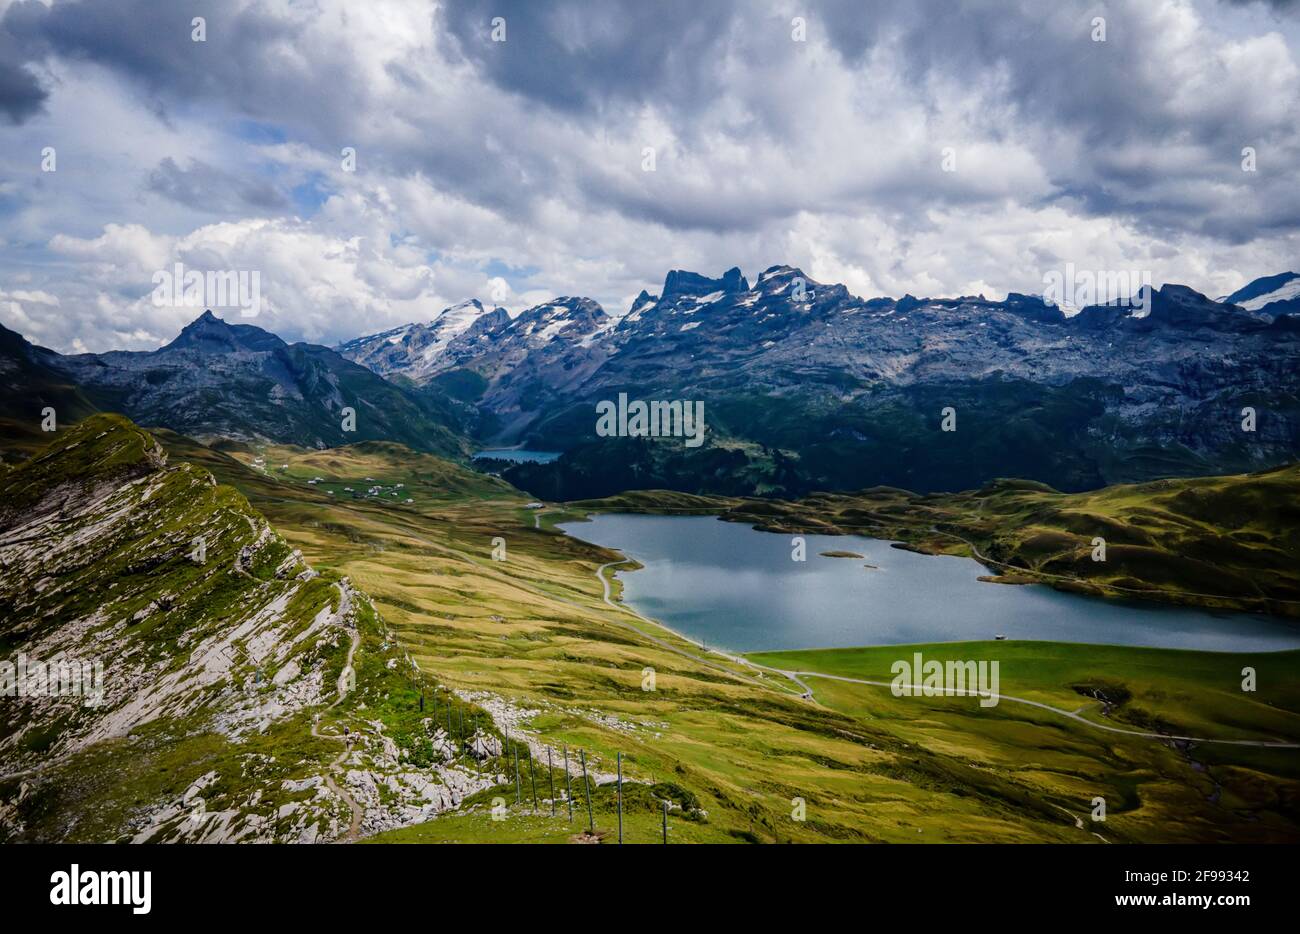 Amazing nature of Switzerland in the Swiss Alps - travel photography Stock Photo